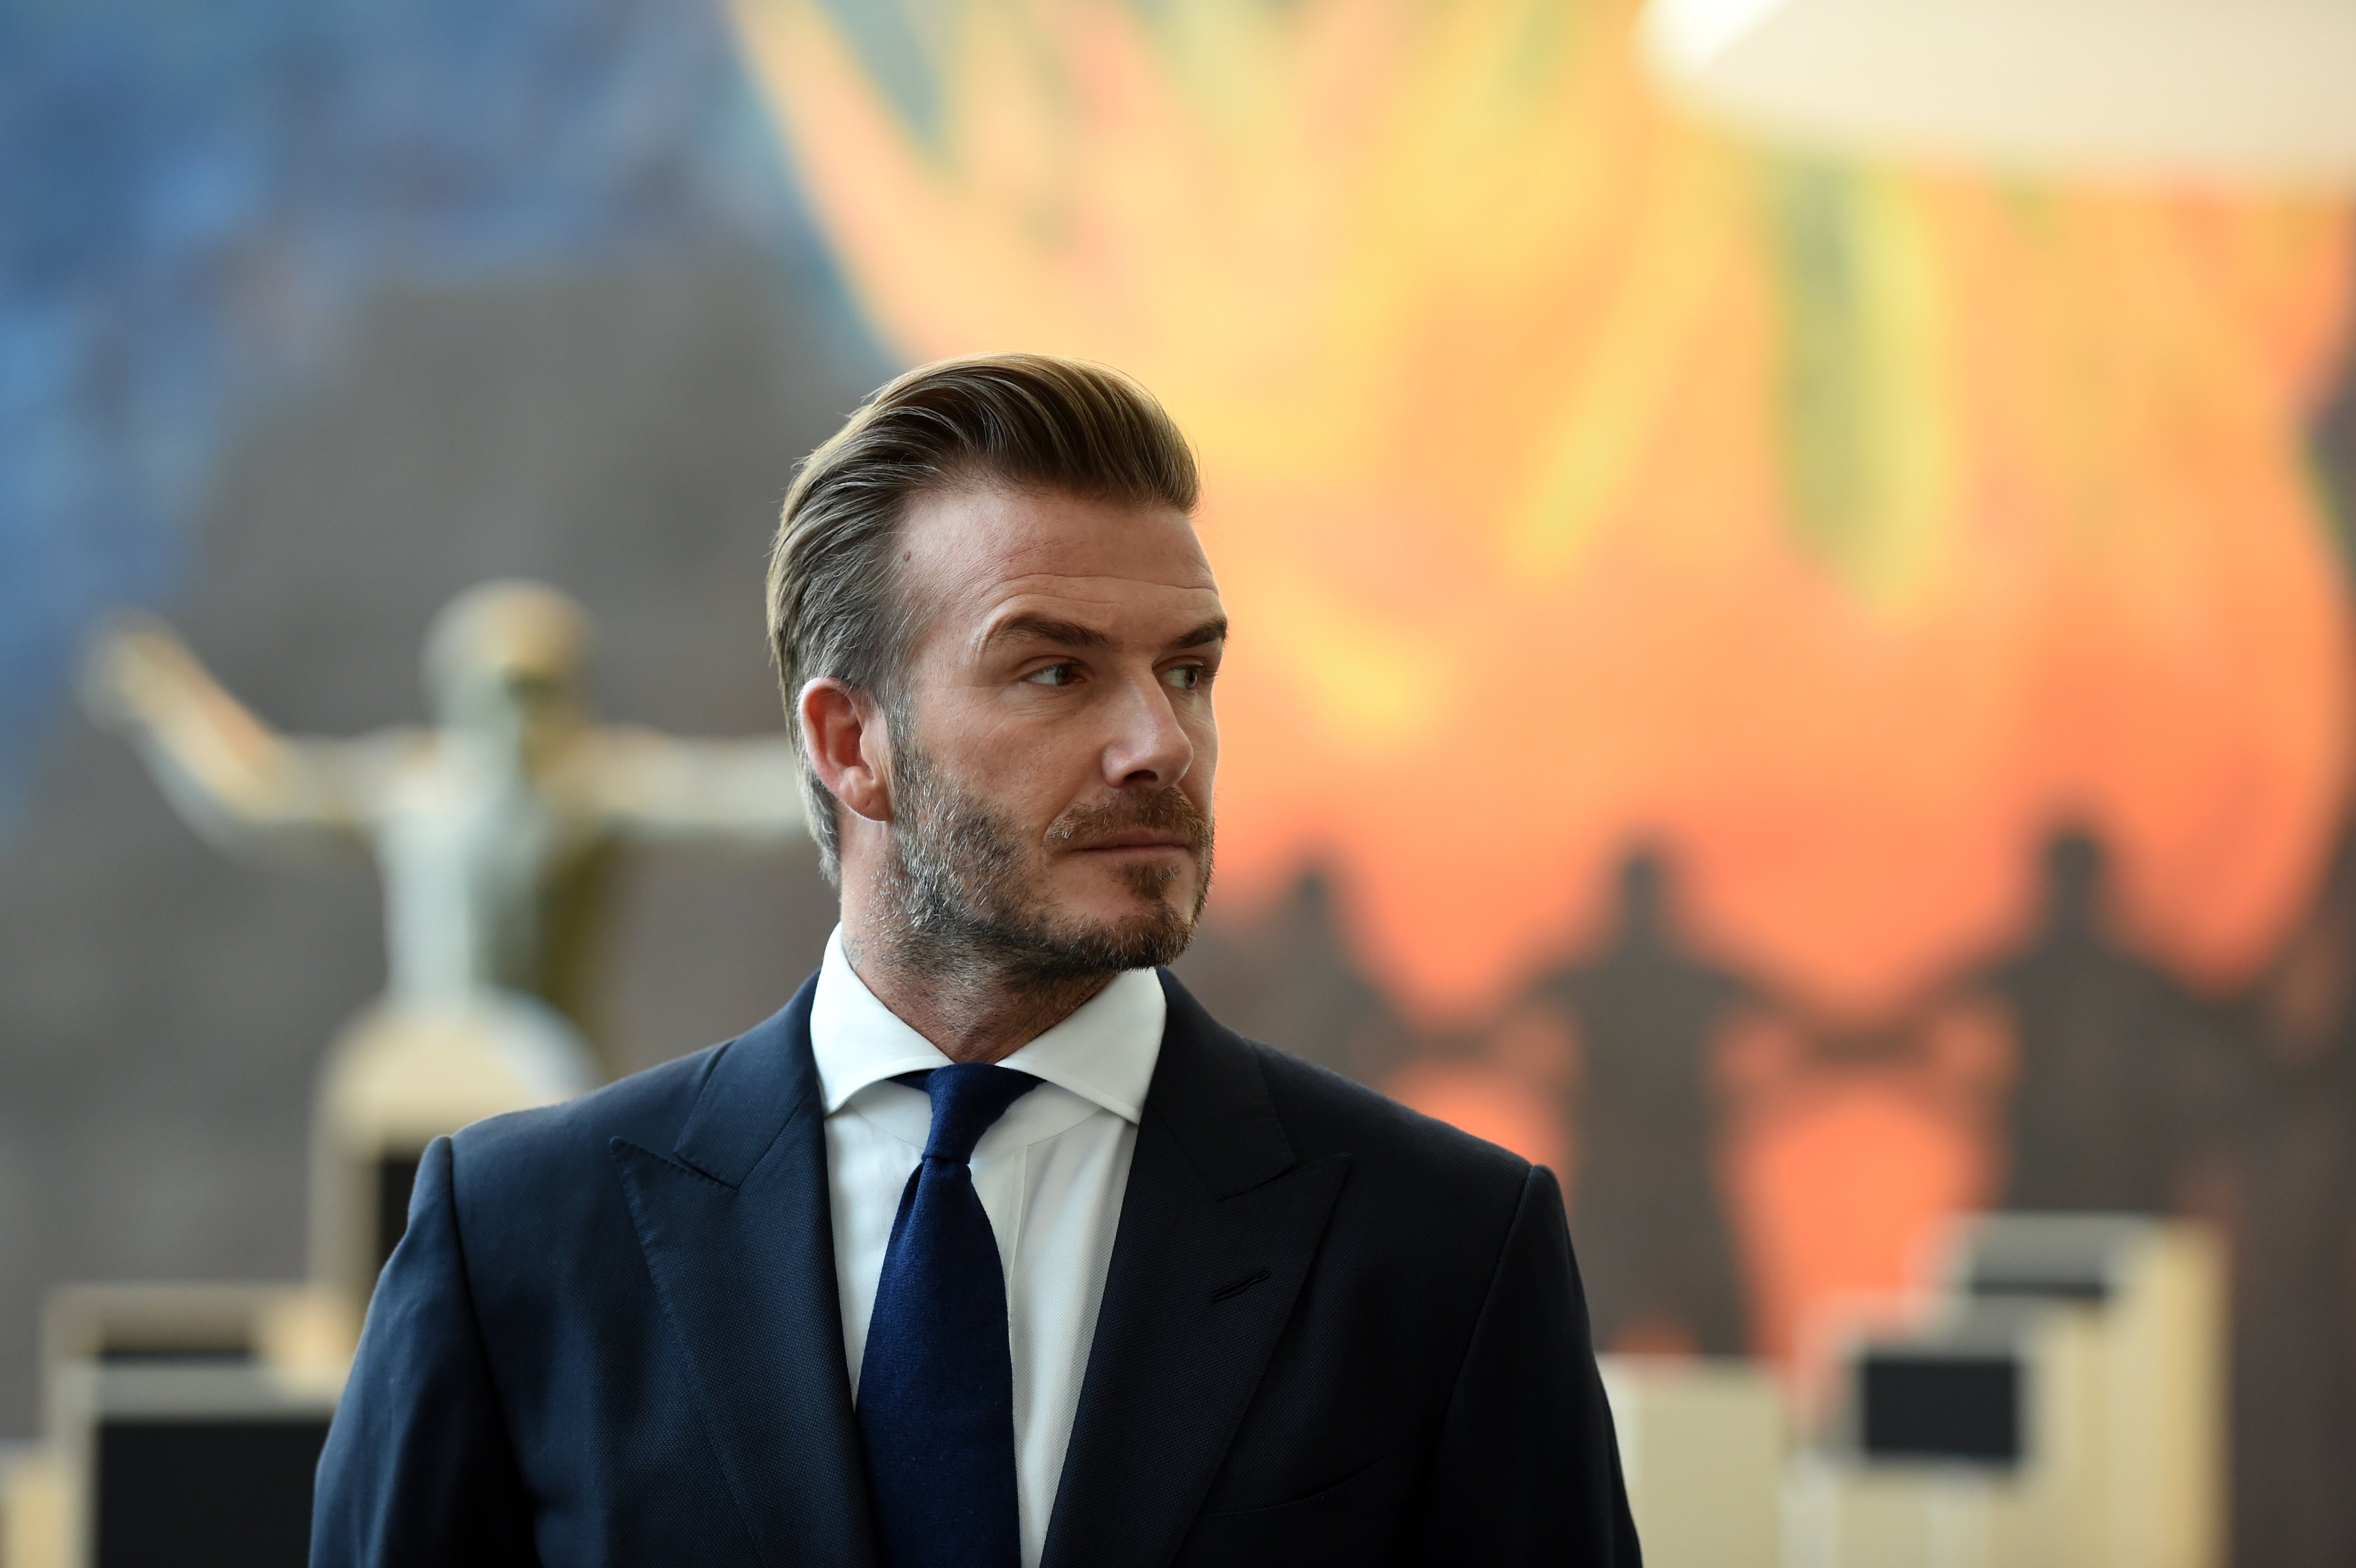 Who Is David Beckham's Hairstylist?